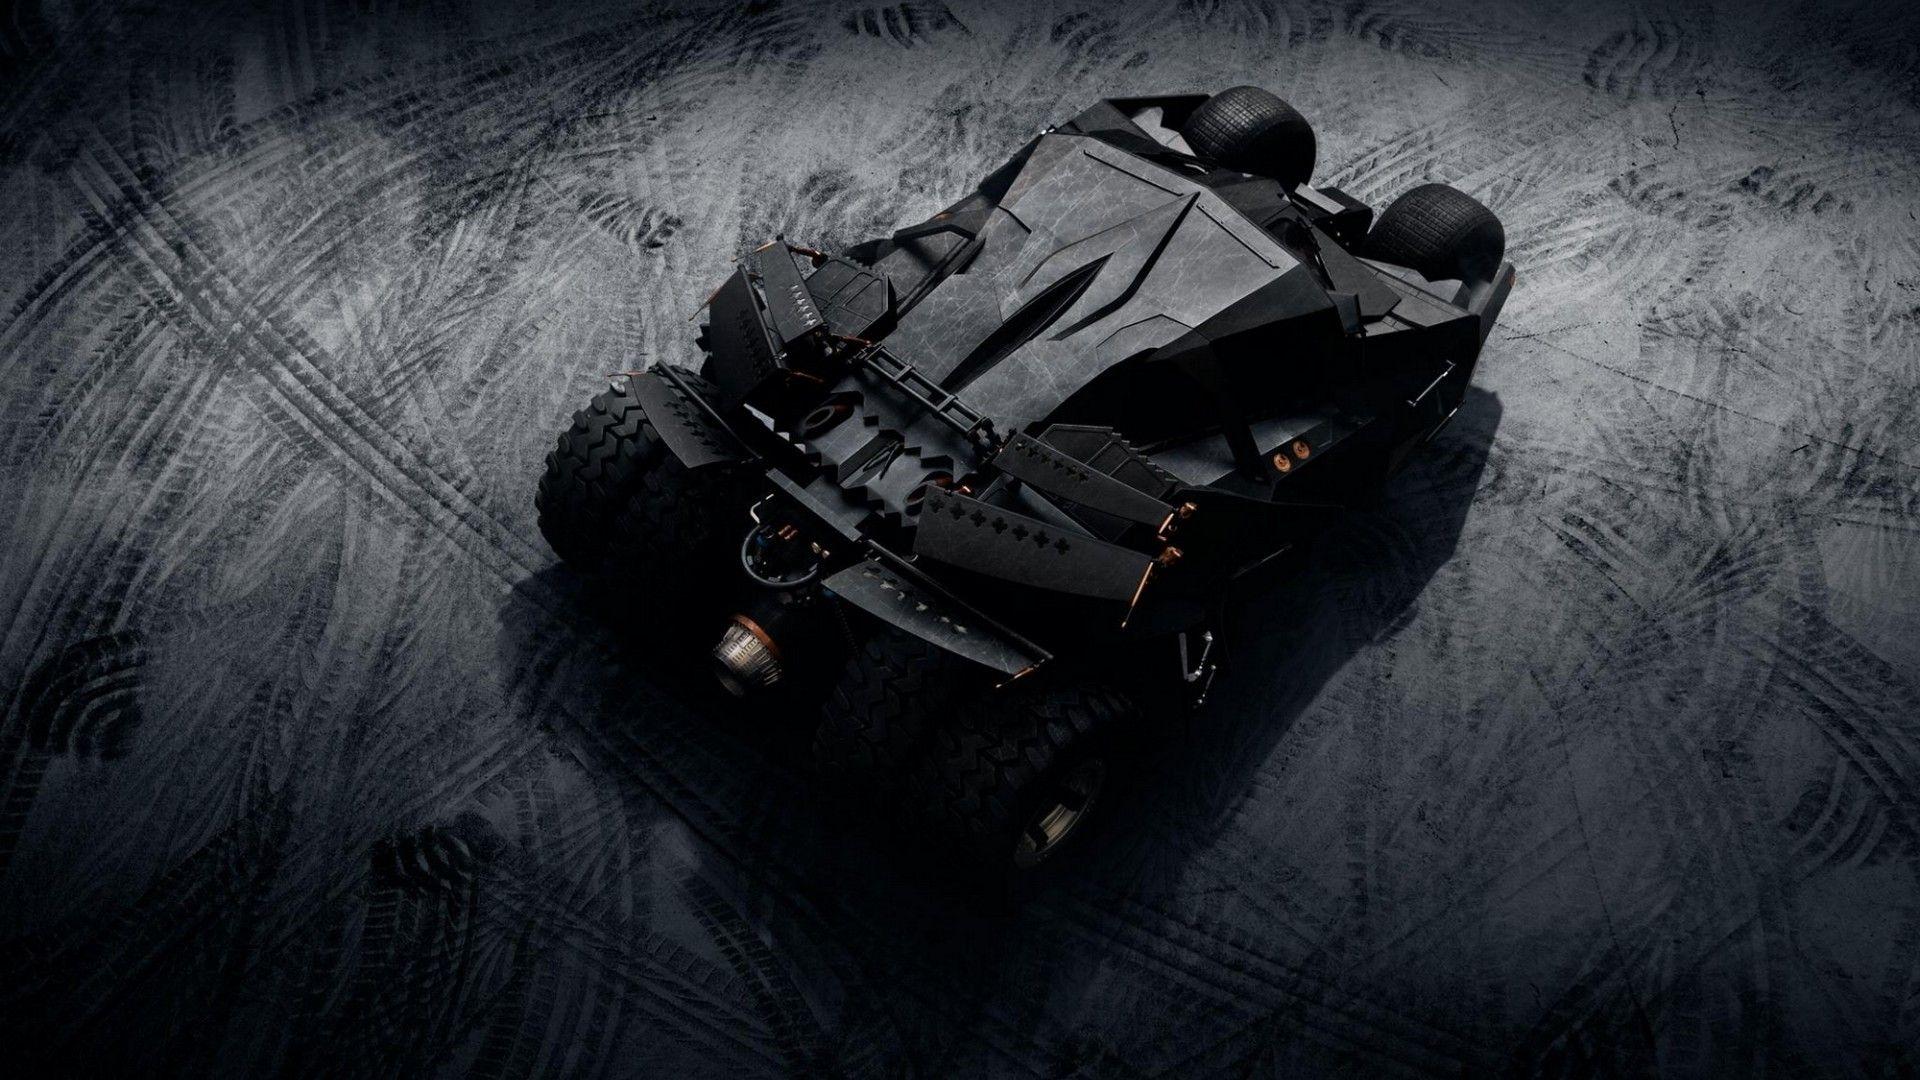 Batman Batmobile, HD Cars, 4k Wallpaper, Image, Background